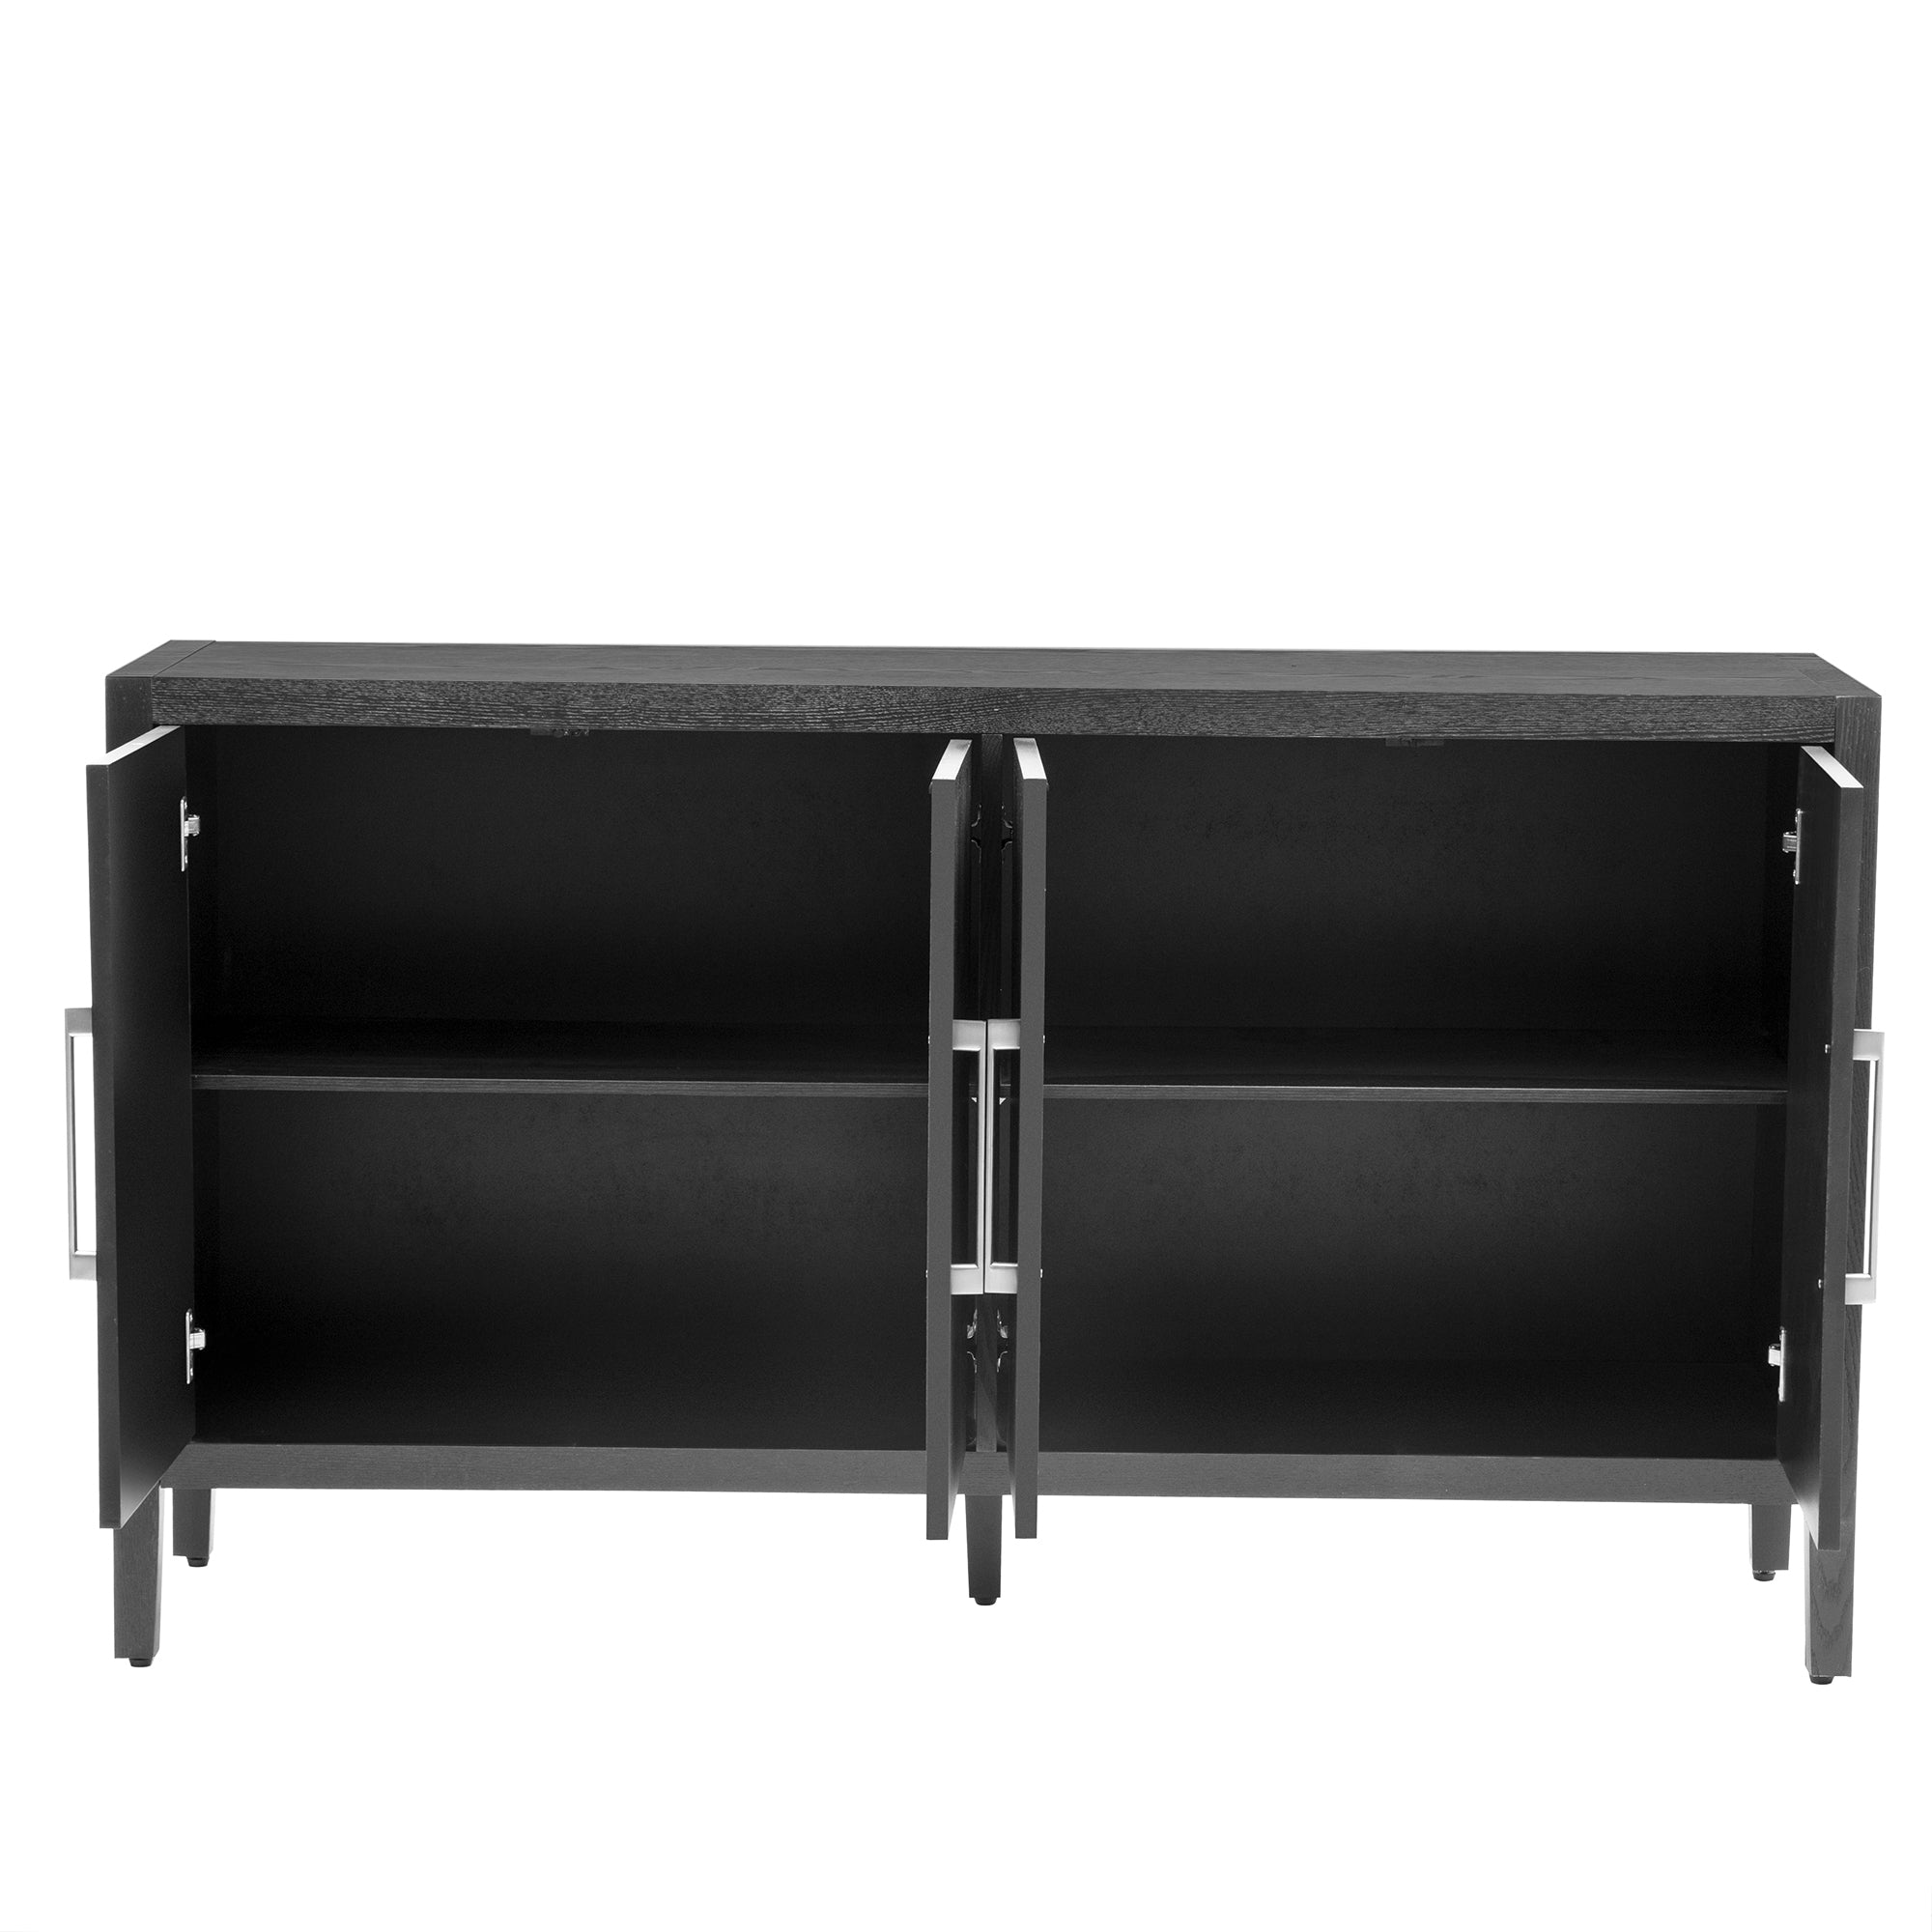 U STYLE Storage Cabinet Sideboard Wooden Cabinet with black-mdf